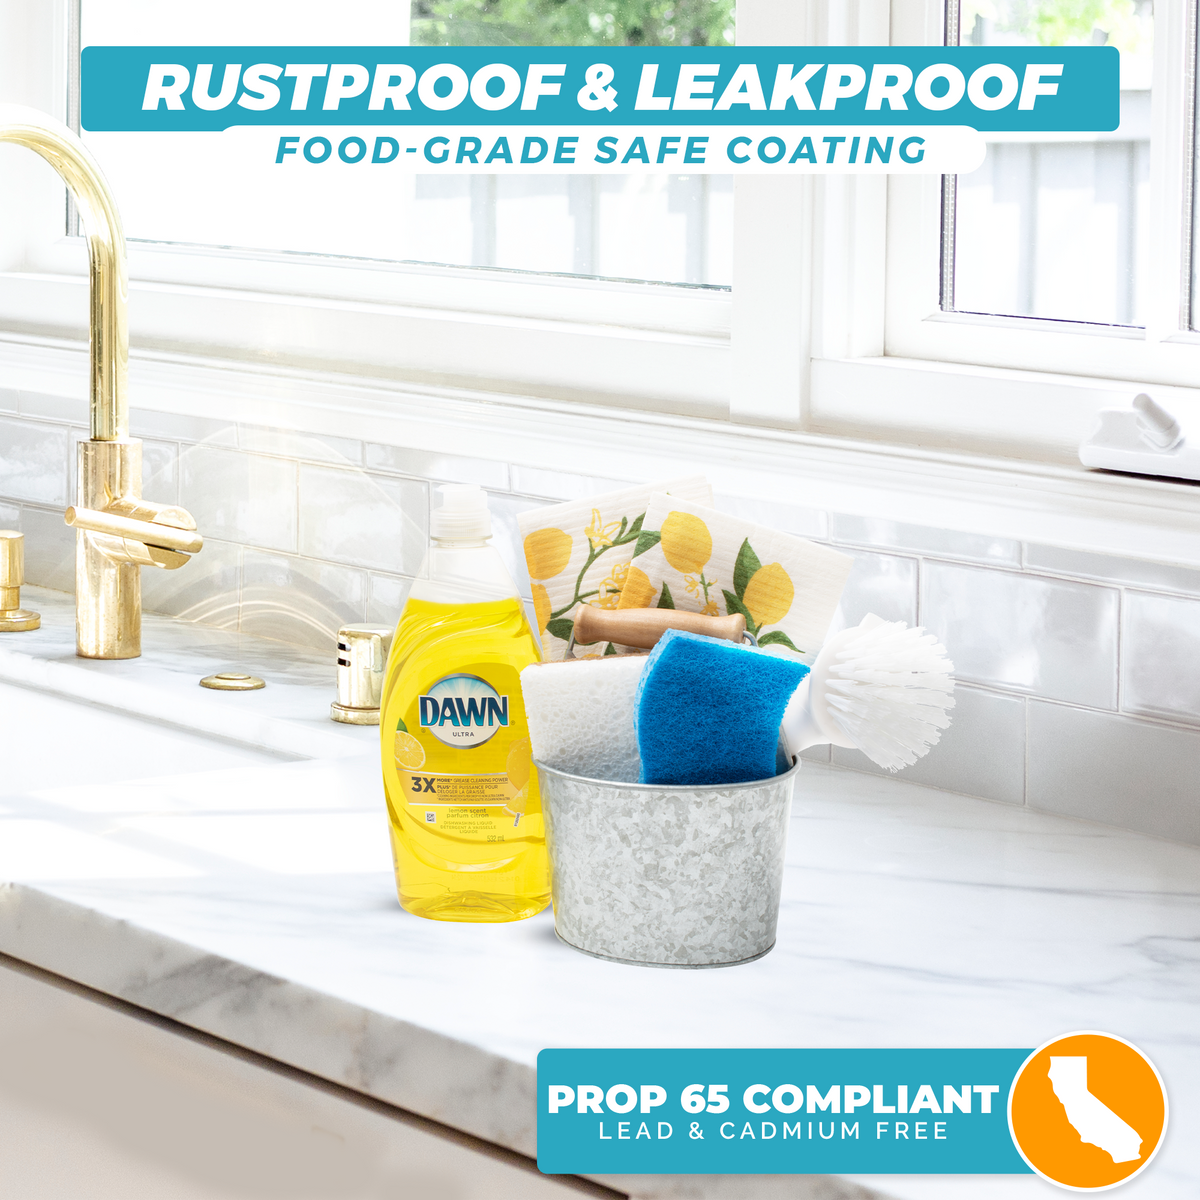 Rustproof and leakproof sponge holder on countertop with dishwashing supplies